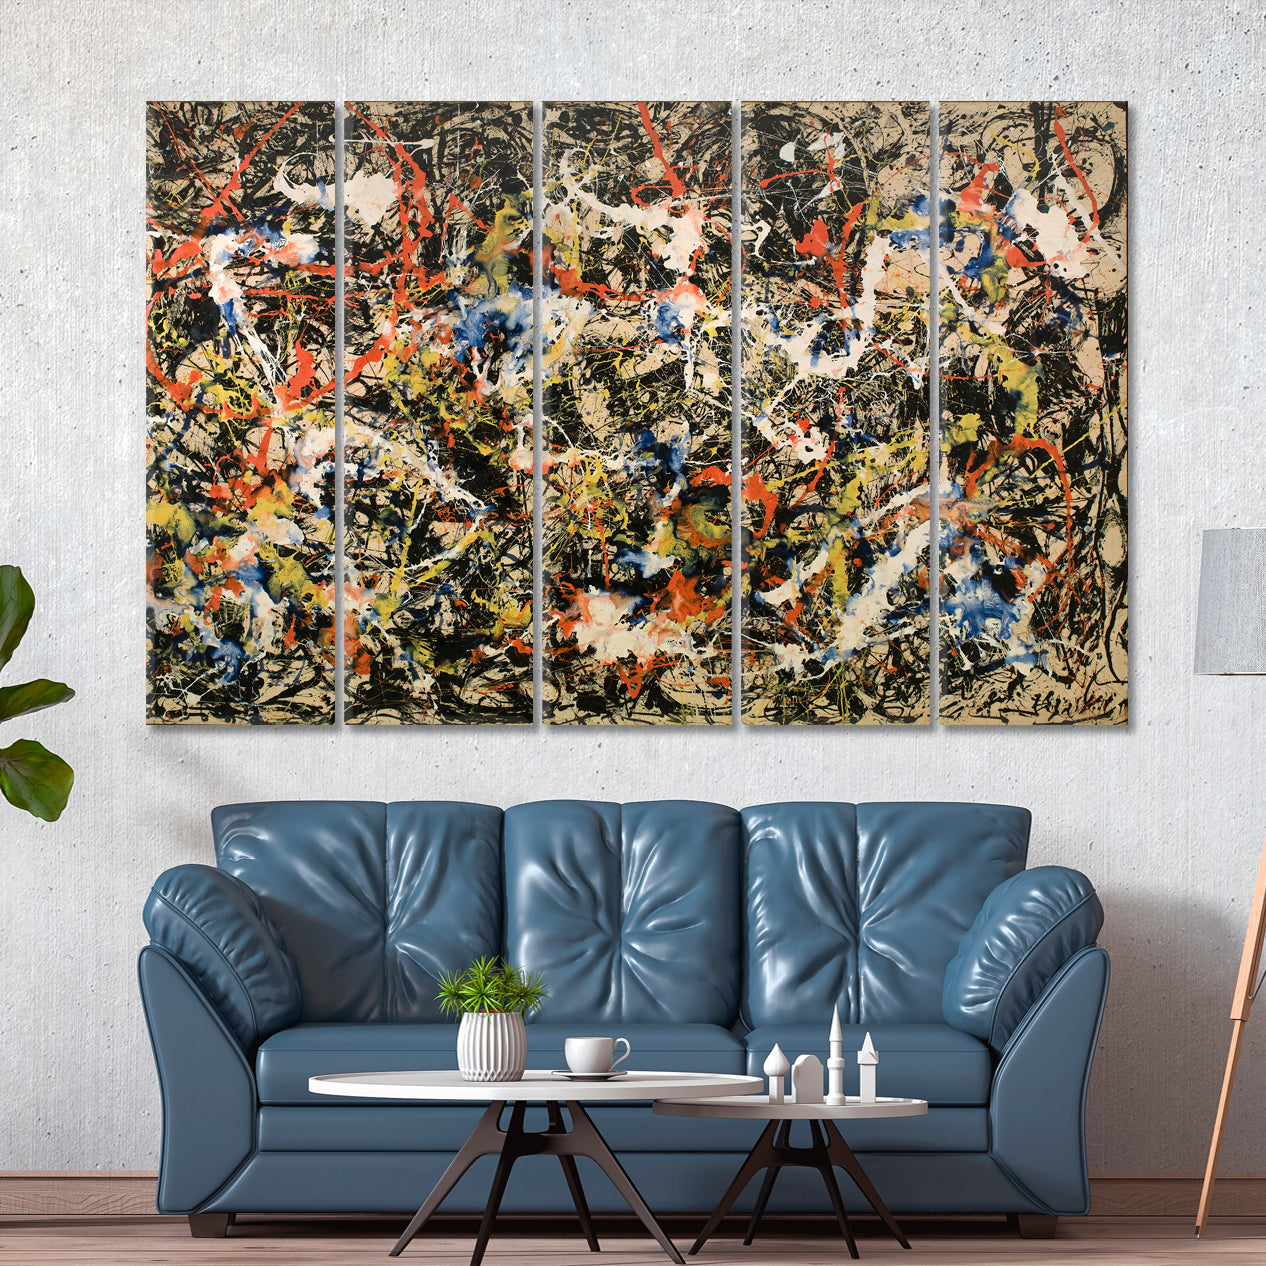 CONVERGENCE Jackson Pollock's Style Abstract Art Print Artesty 5 panels 36" x 24" 